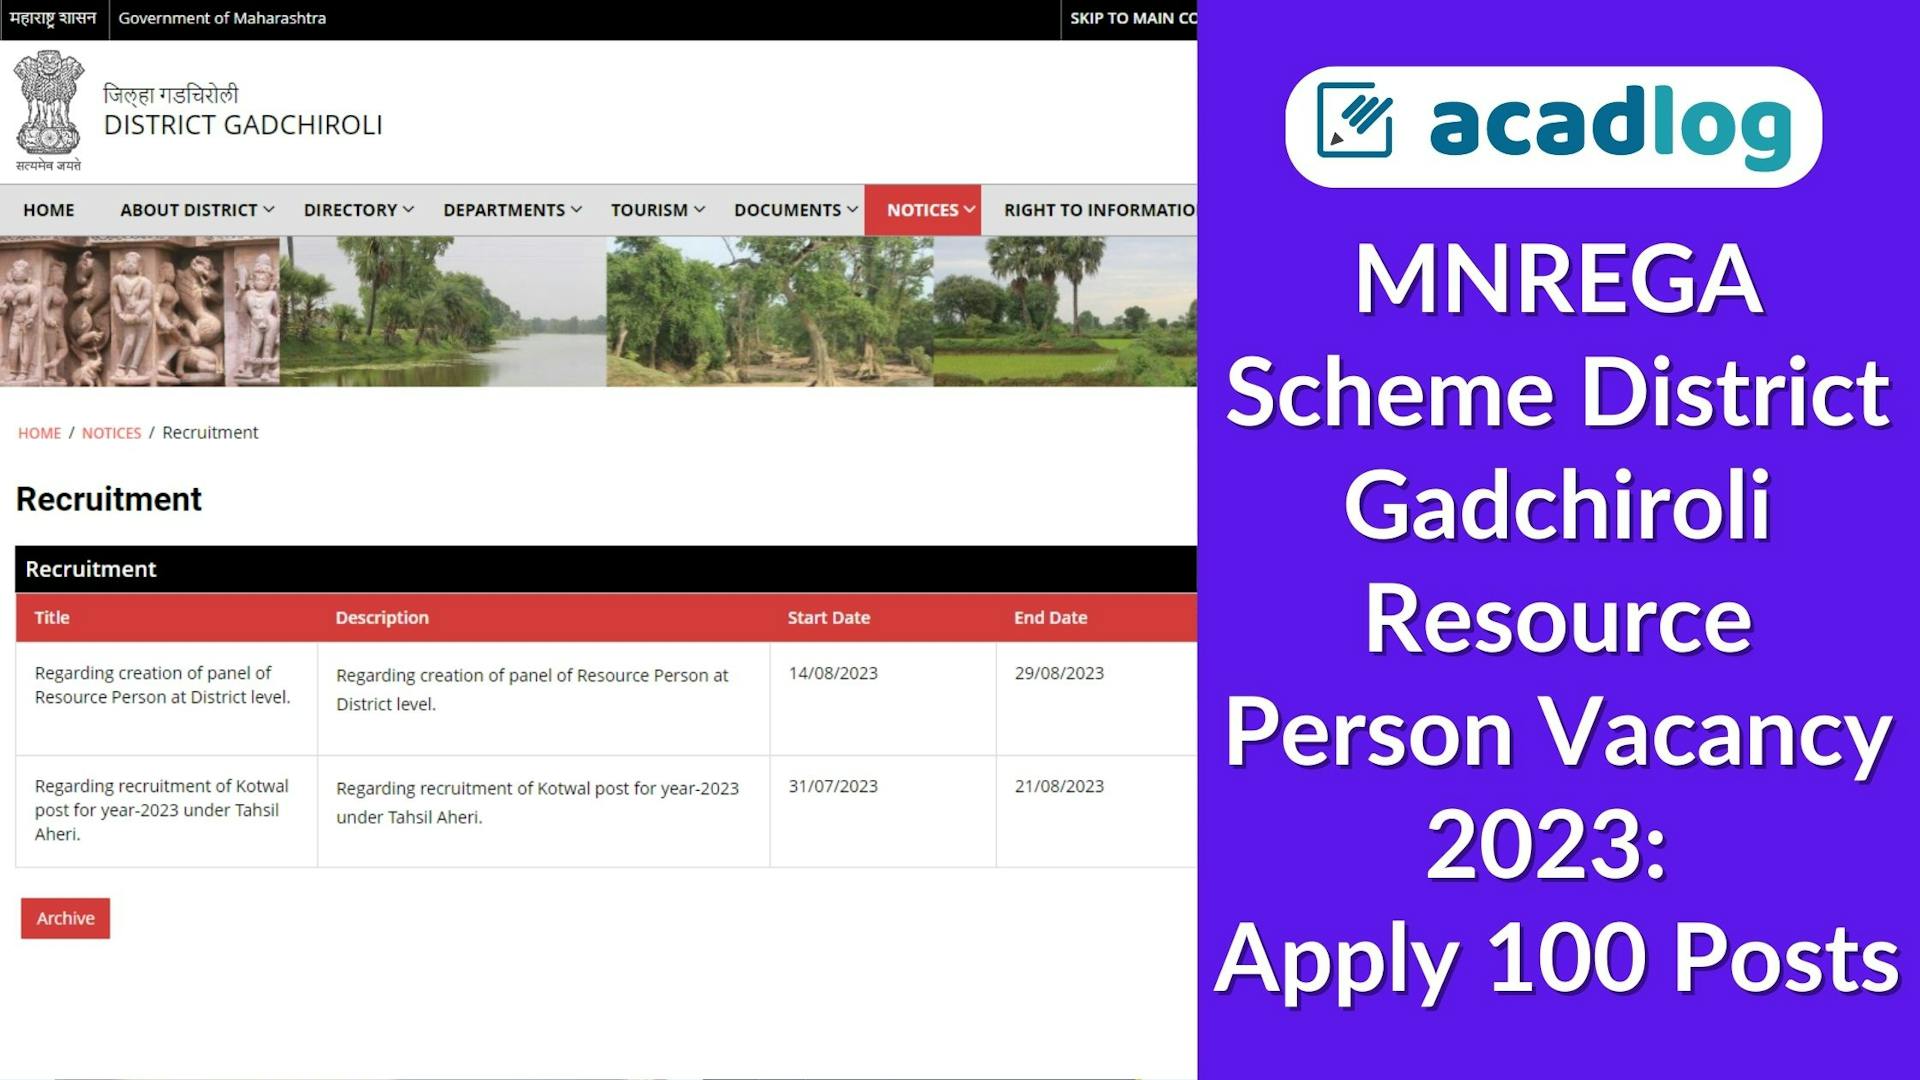 MNREGA Scheme District Gadchiroli Resource Person Vacancy 2023: Apply 100 Posts